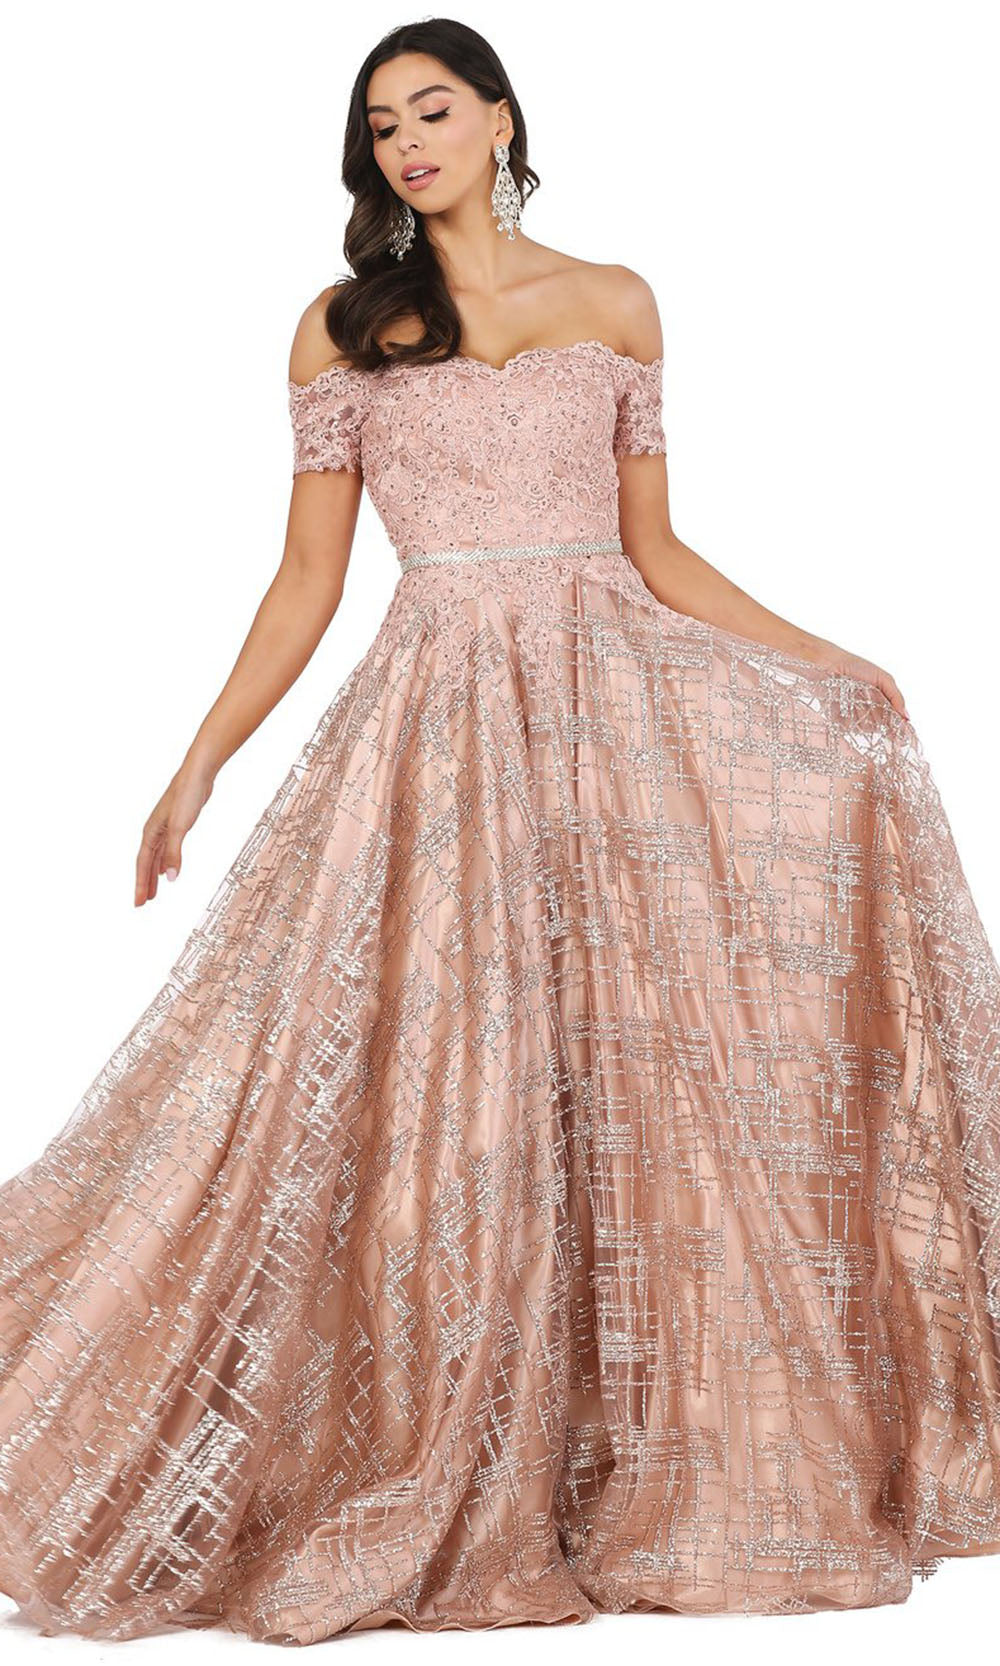 Dancing Queen - 2937 Appliqued Off Shoulder Glitter Ballgown In Pink